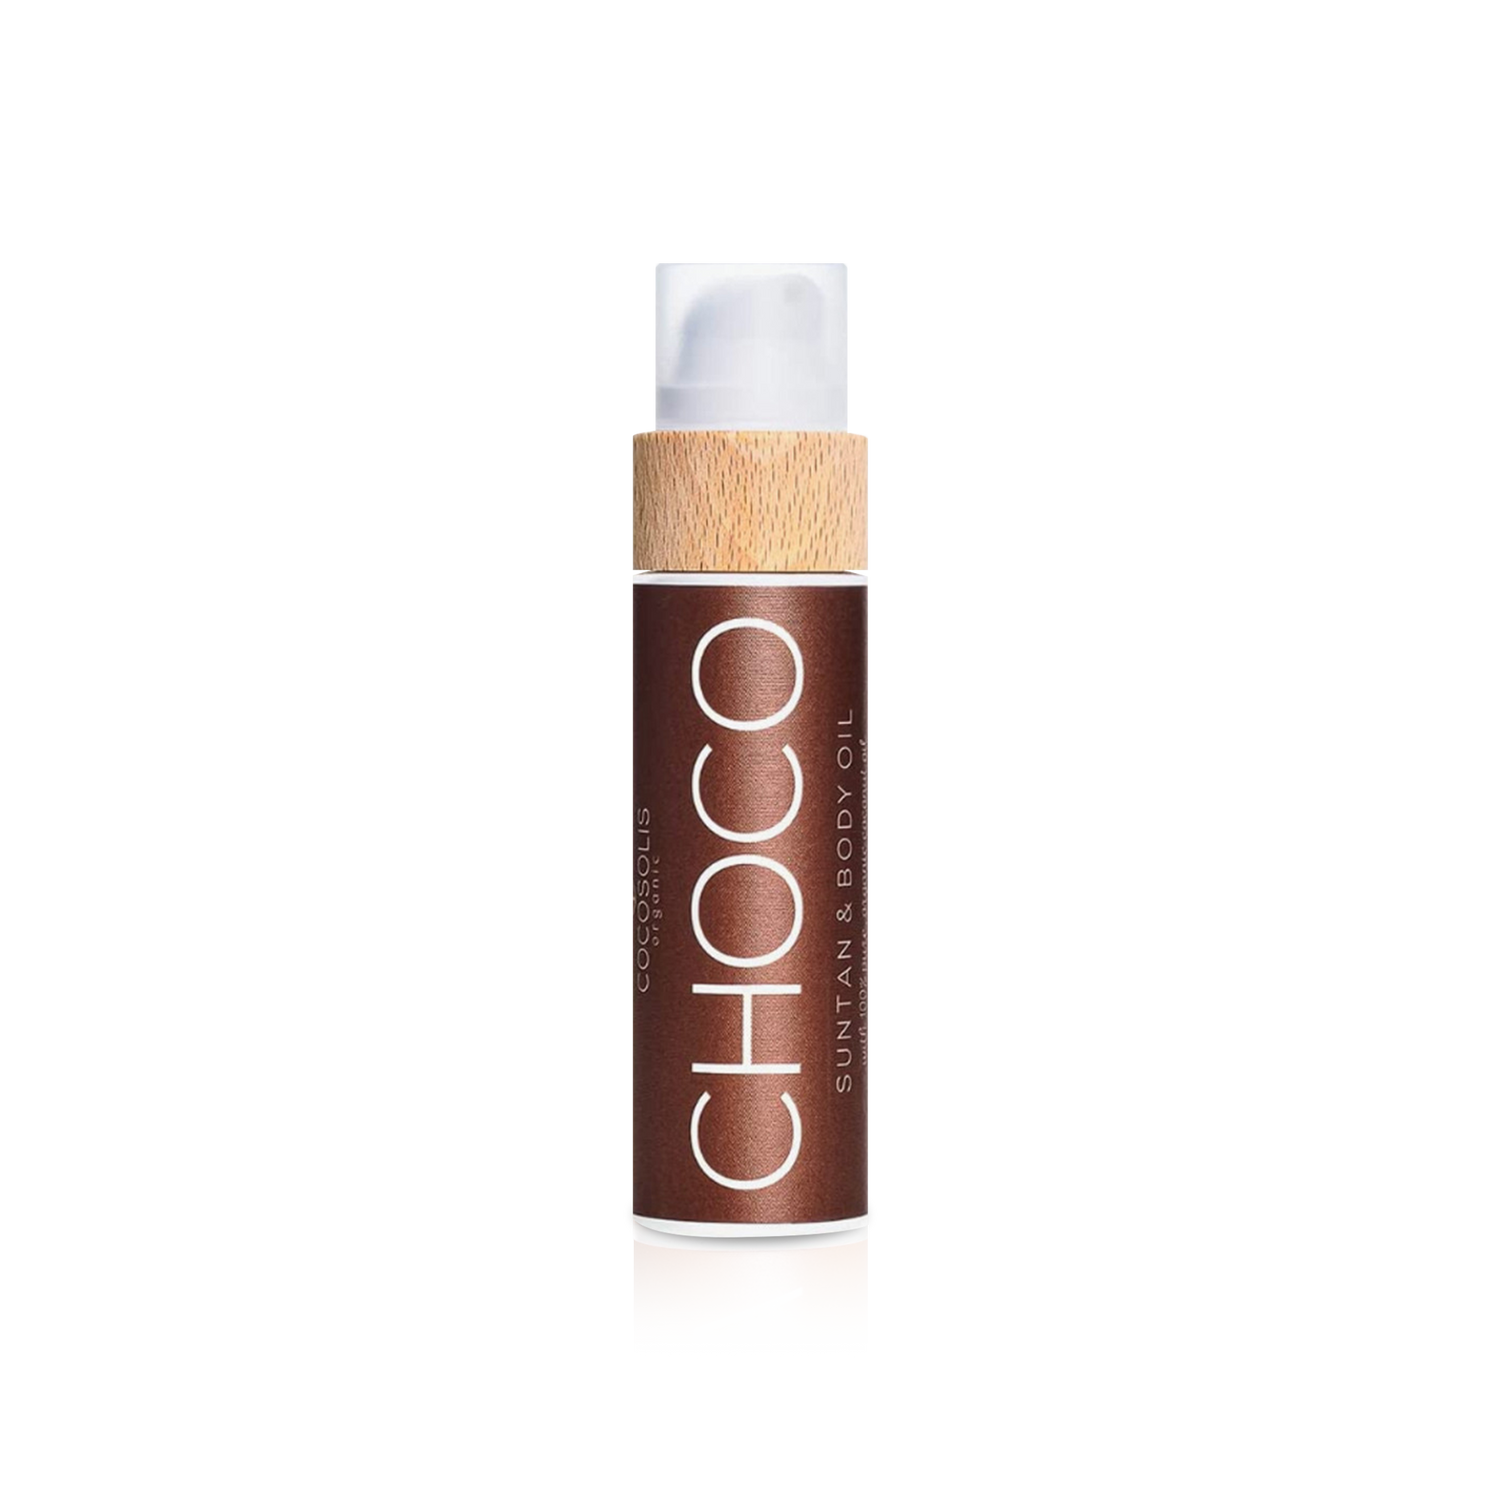 Choco Suntan And Body Oil